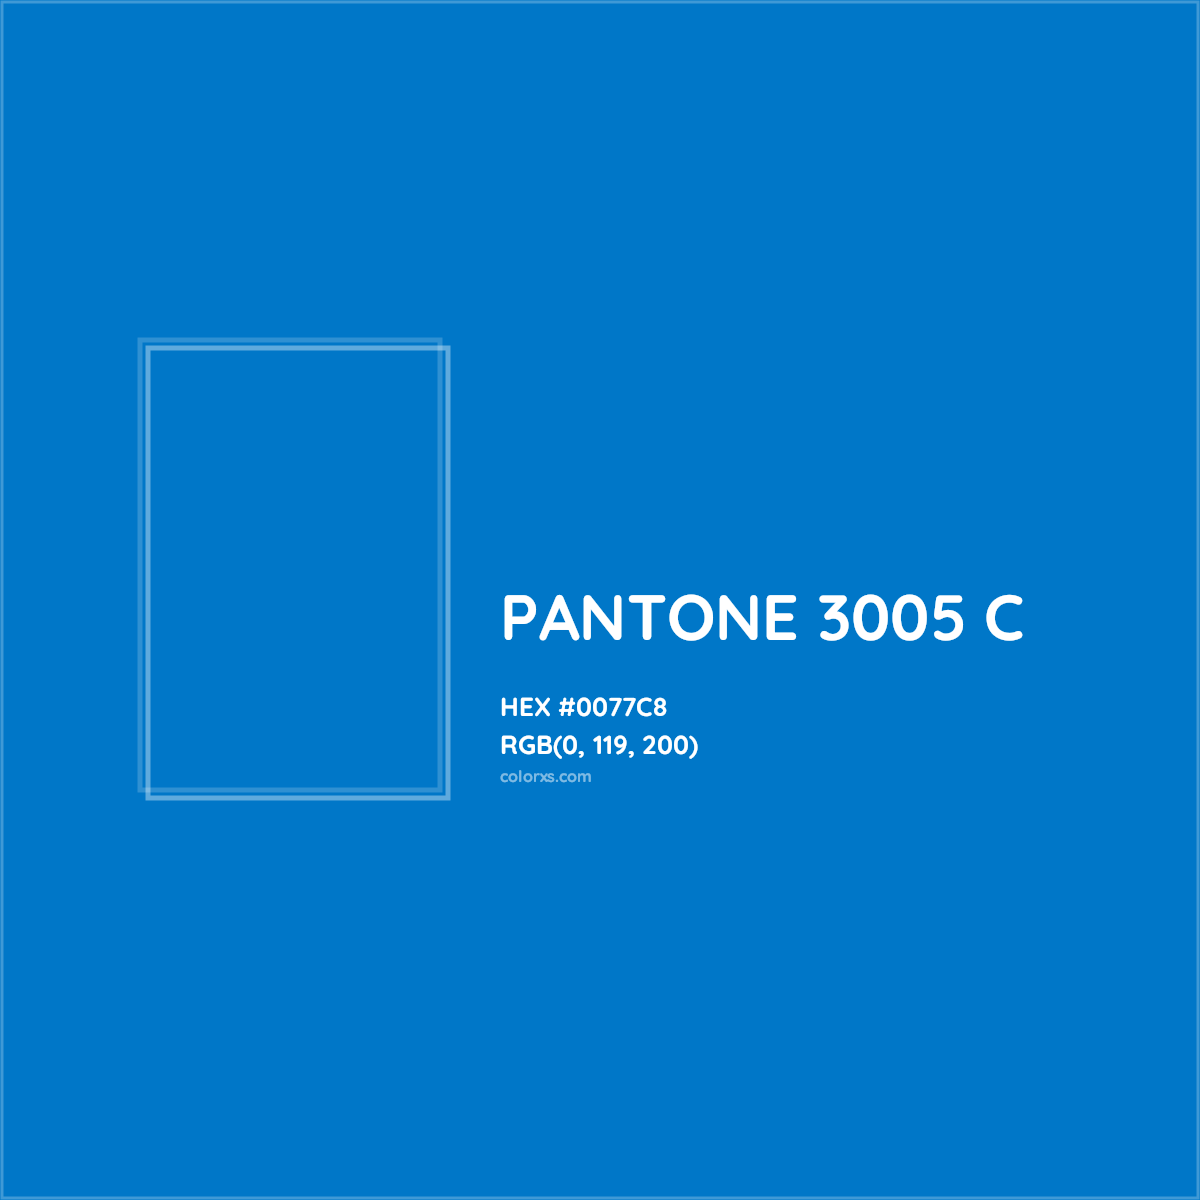 HEX #0077C8 PANTONE 3005 C CMS Pantone PMS - Color Code